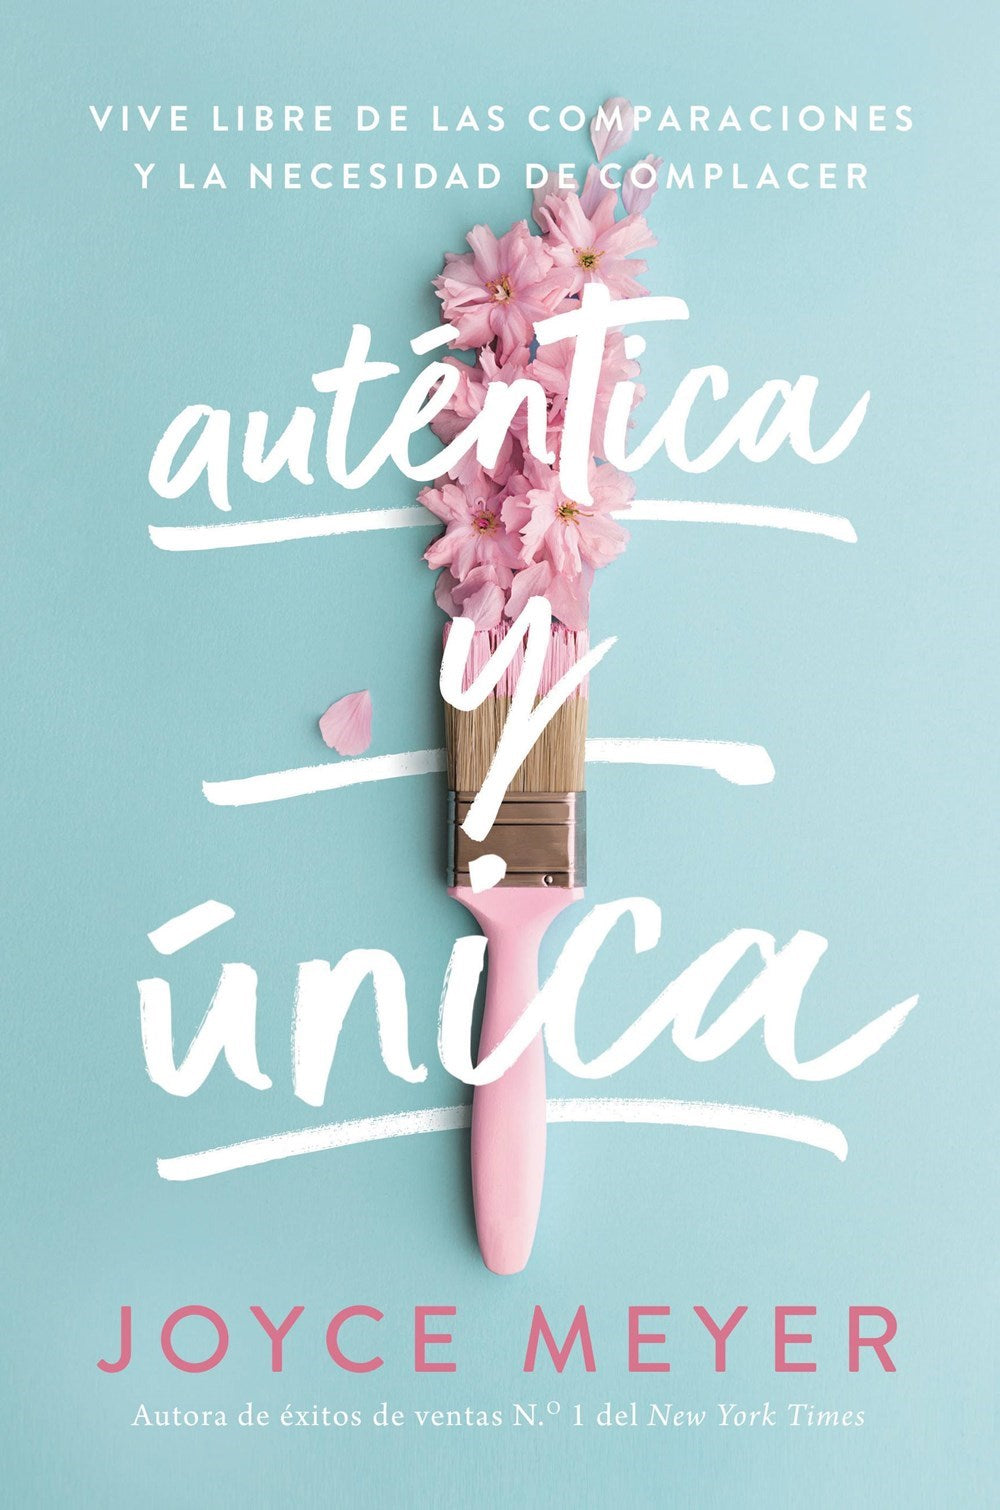 Spanish-Authentically  Uniquely You (Autentica Y Unica)